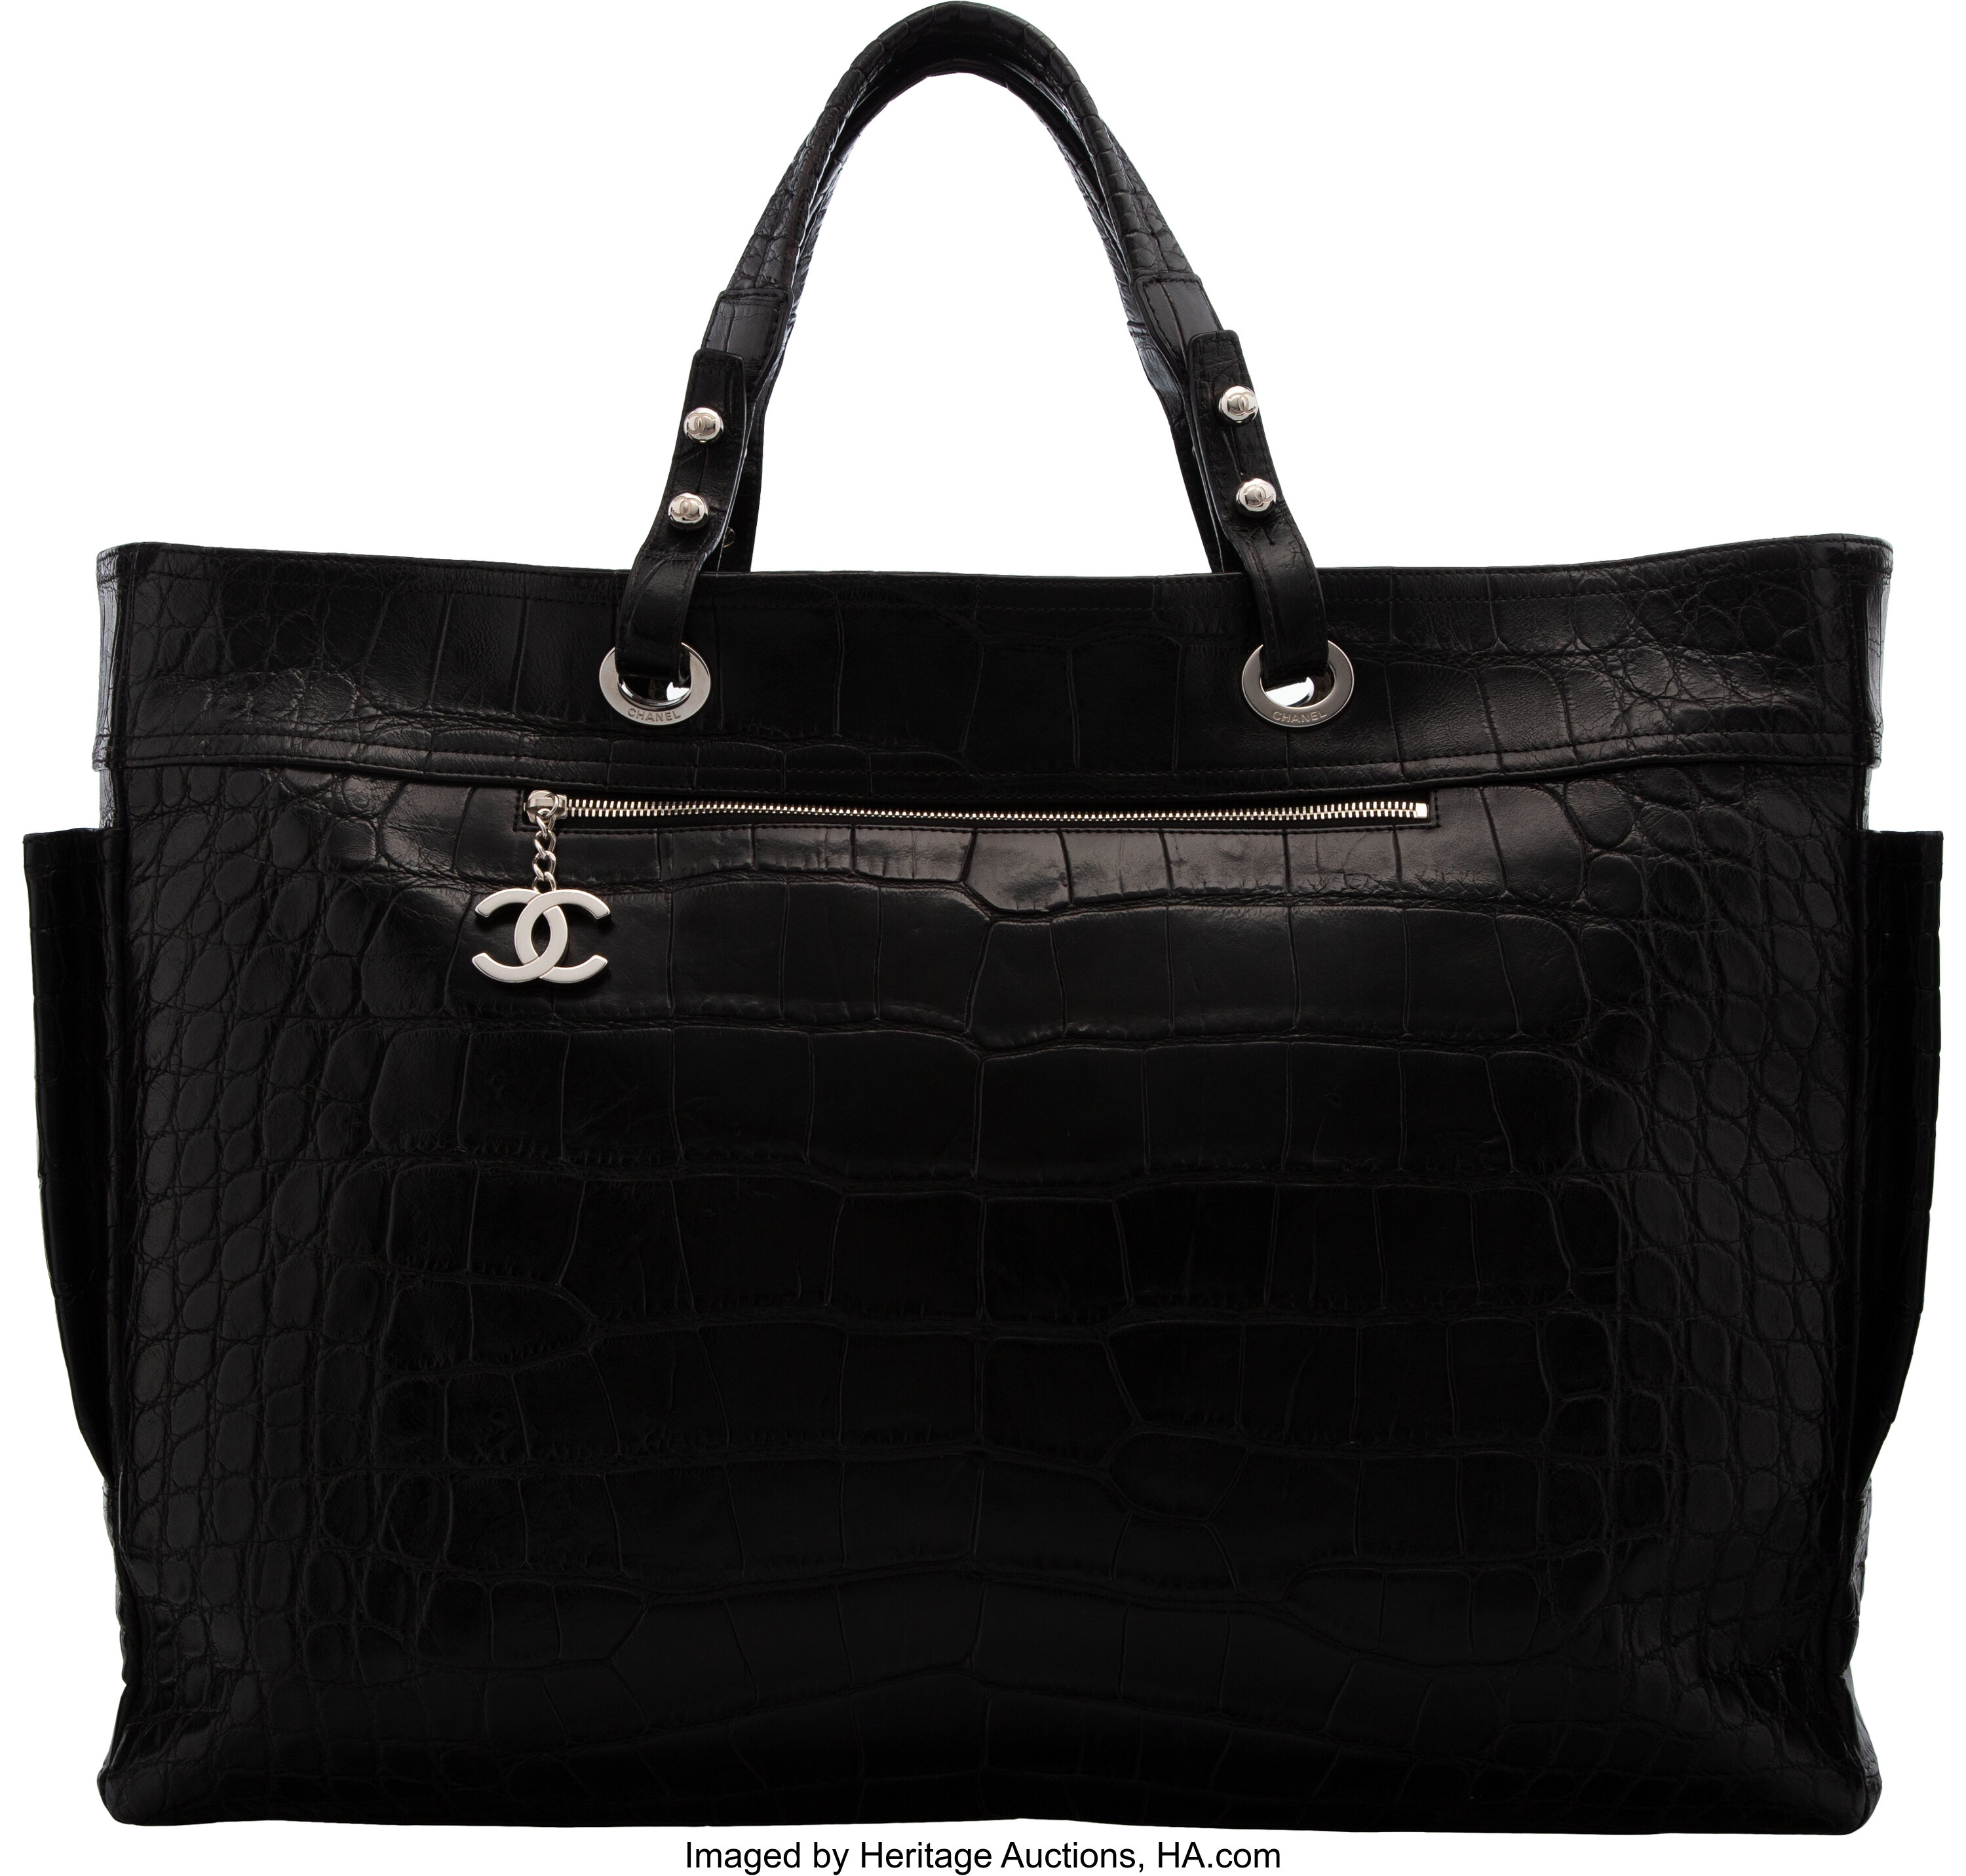 Chanel Large Paris-Biarritz Tote - Black Totes, Handbags - CHA899964